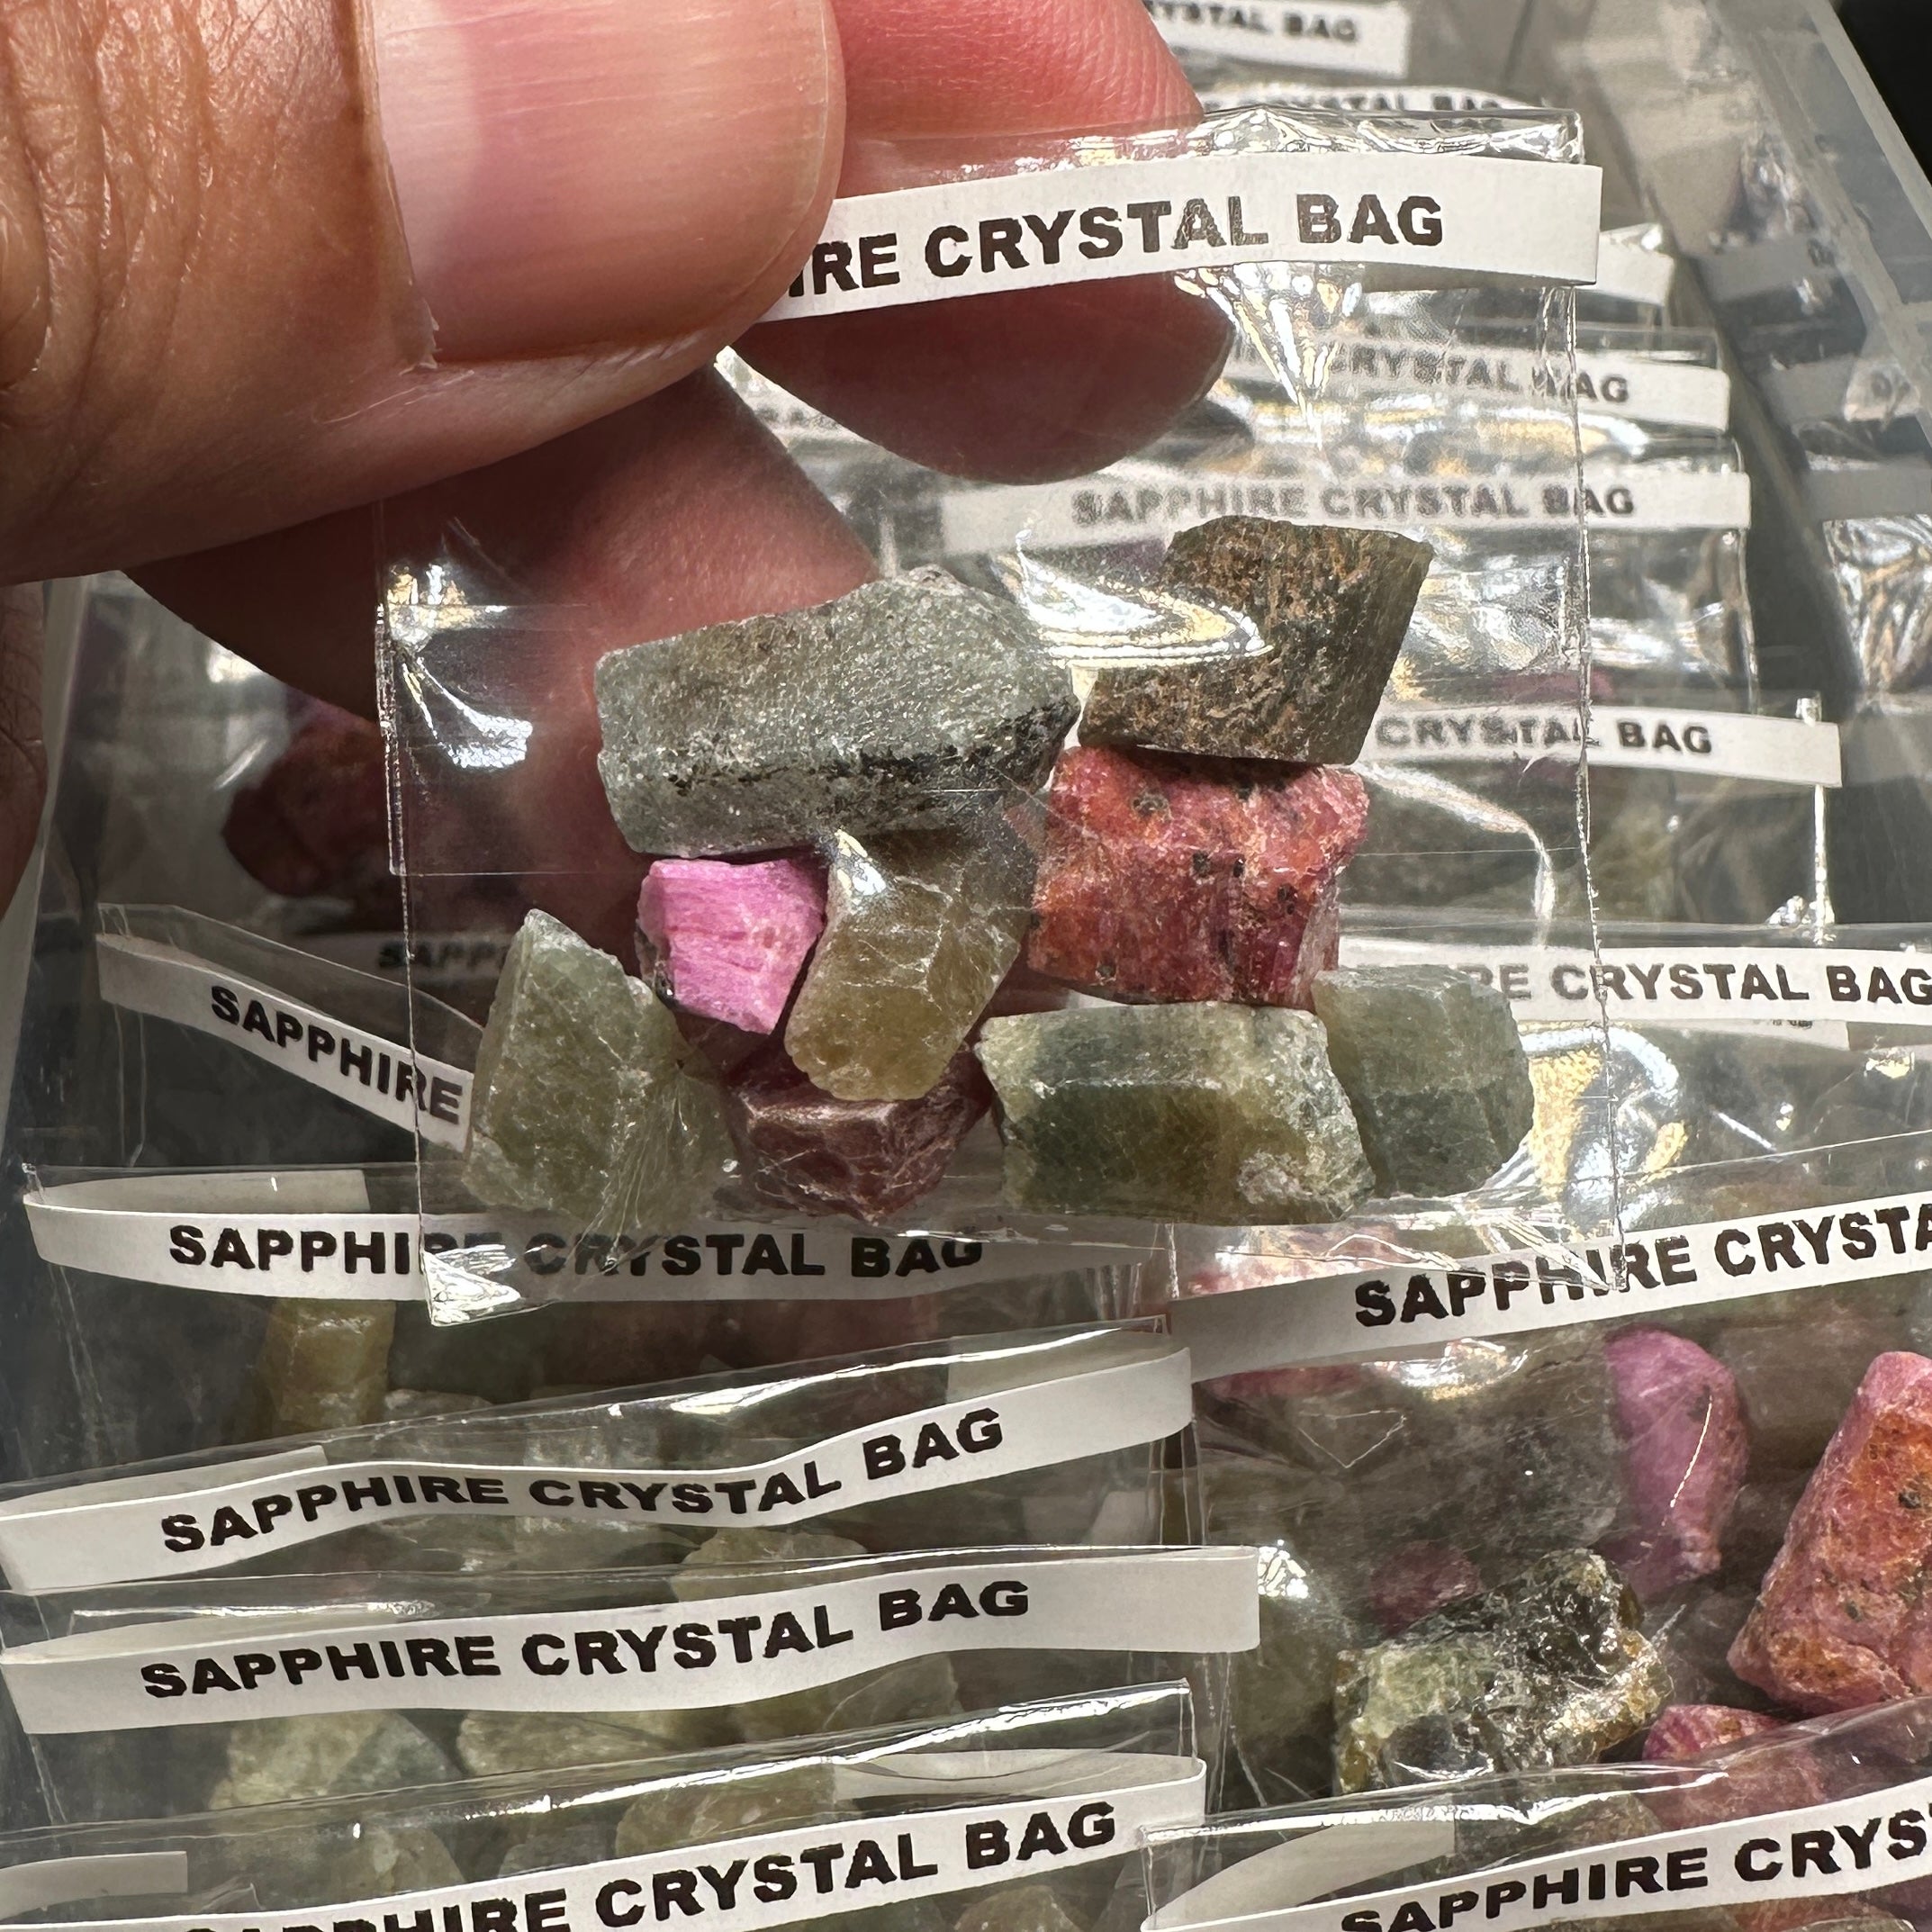 Sapphire Crystal Bag, Tanzania